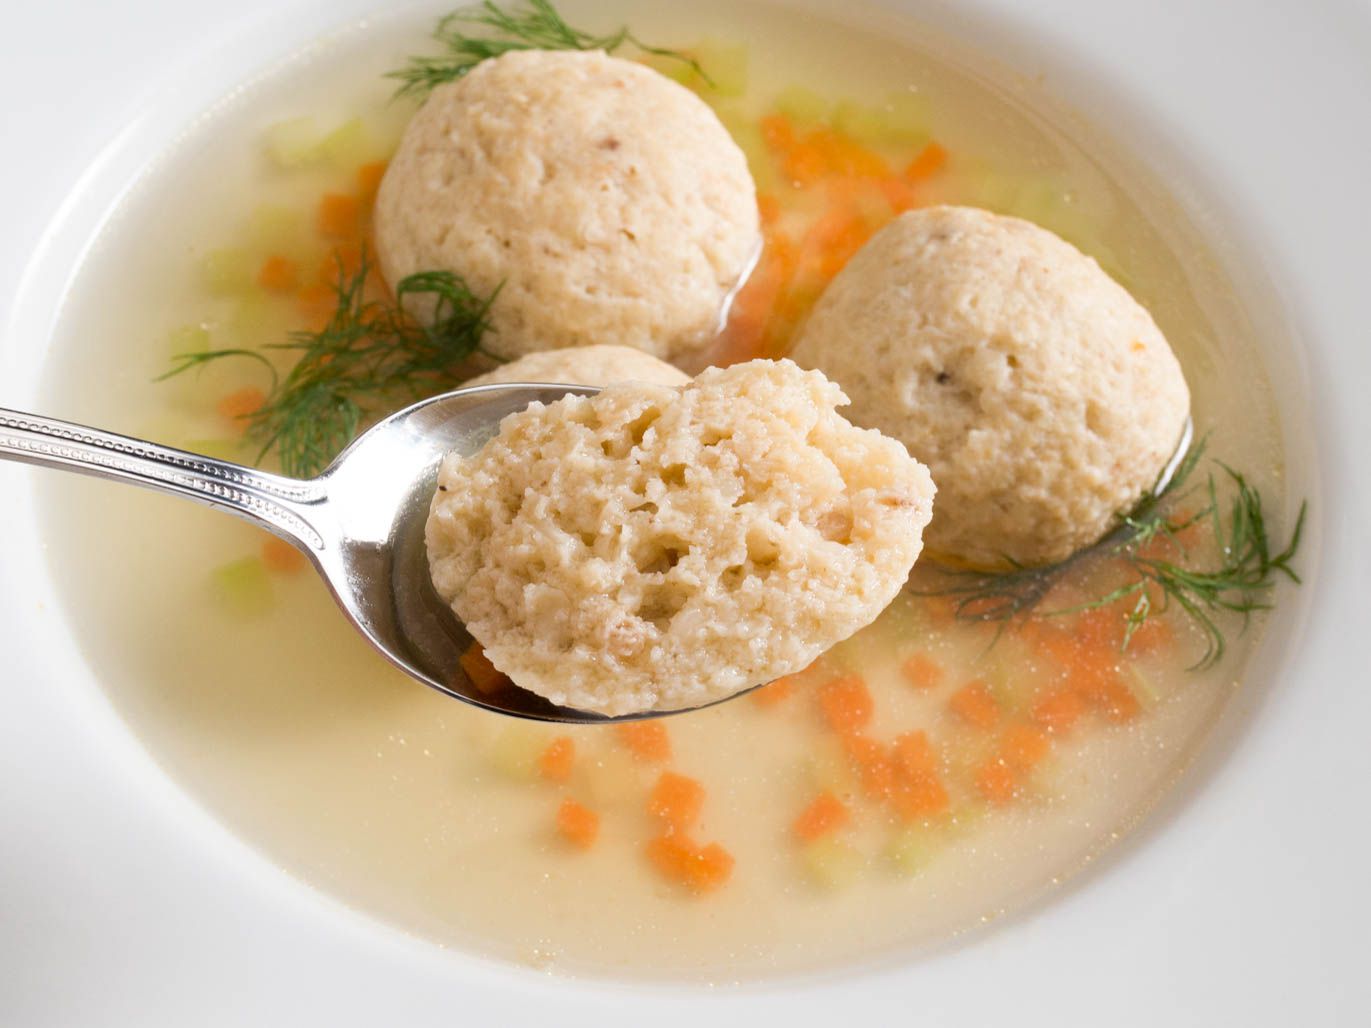 Close-up of a spoon holding a half-eaten matzo ball above a bowl of soup.